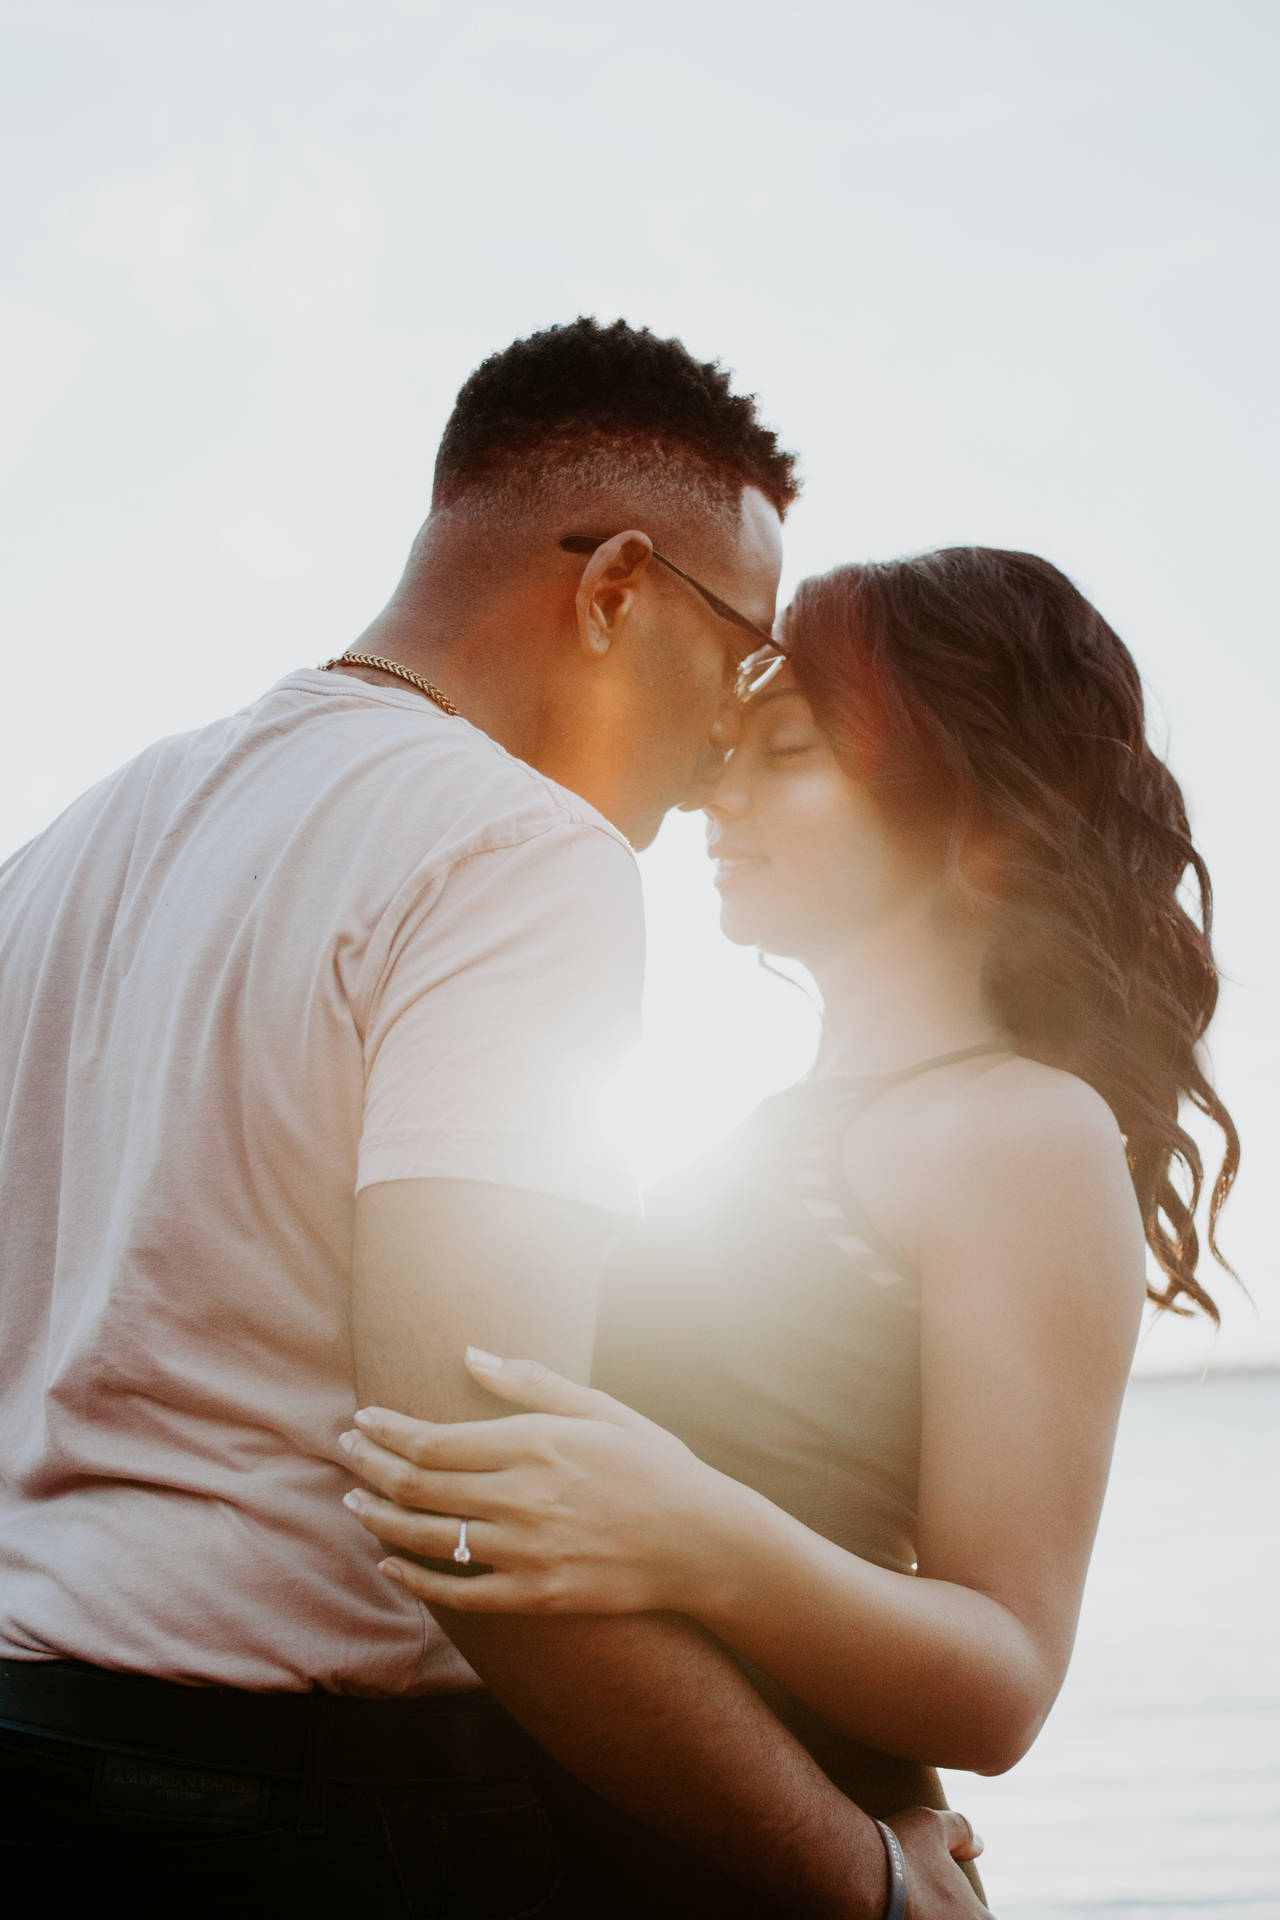 Romantic Couple Intimate Sunlight Kiss Background